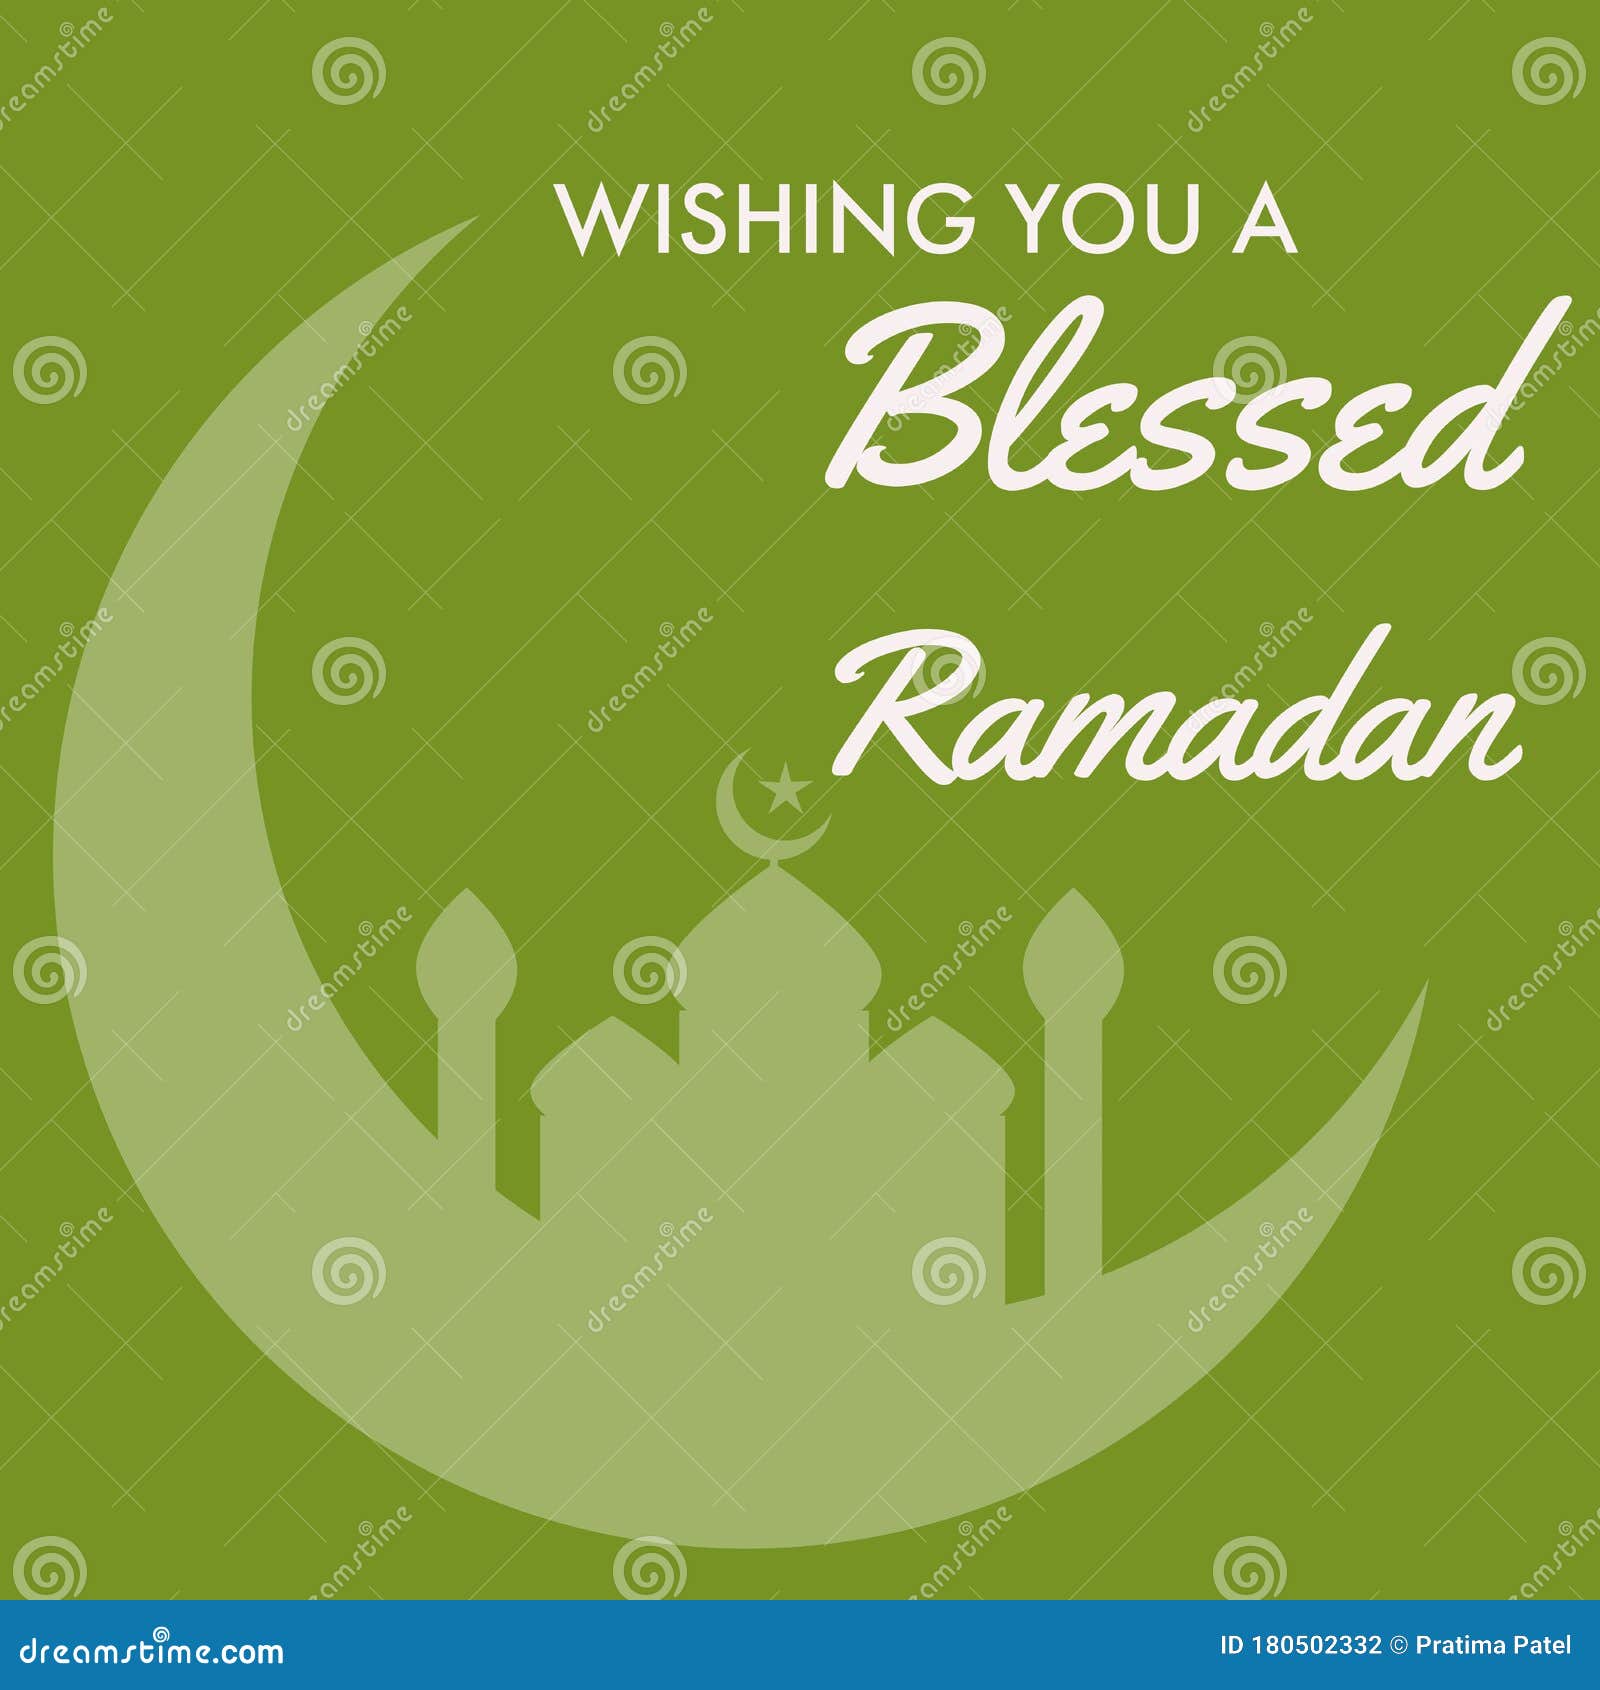 Ramadan wishes happy 30 Ramadan